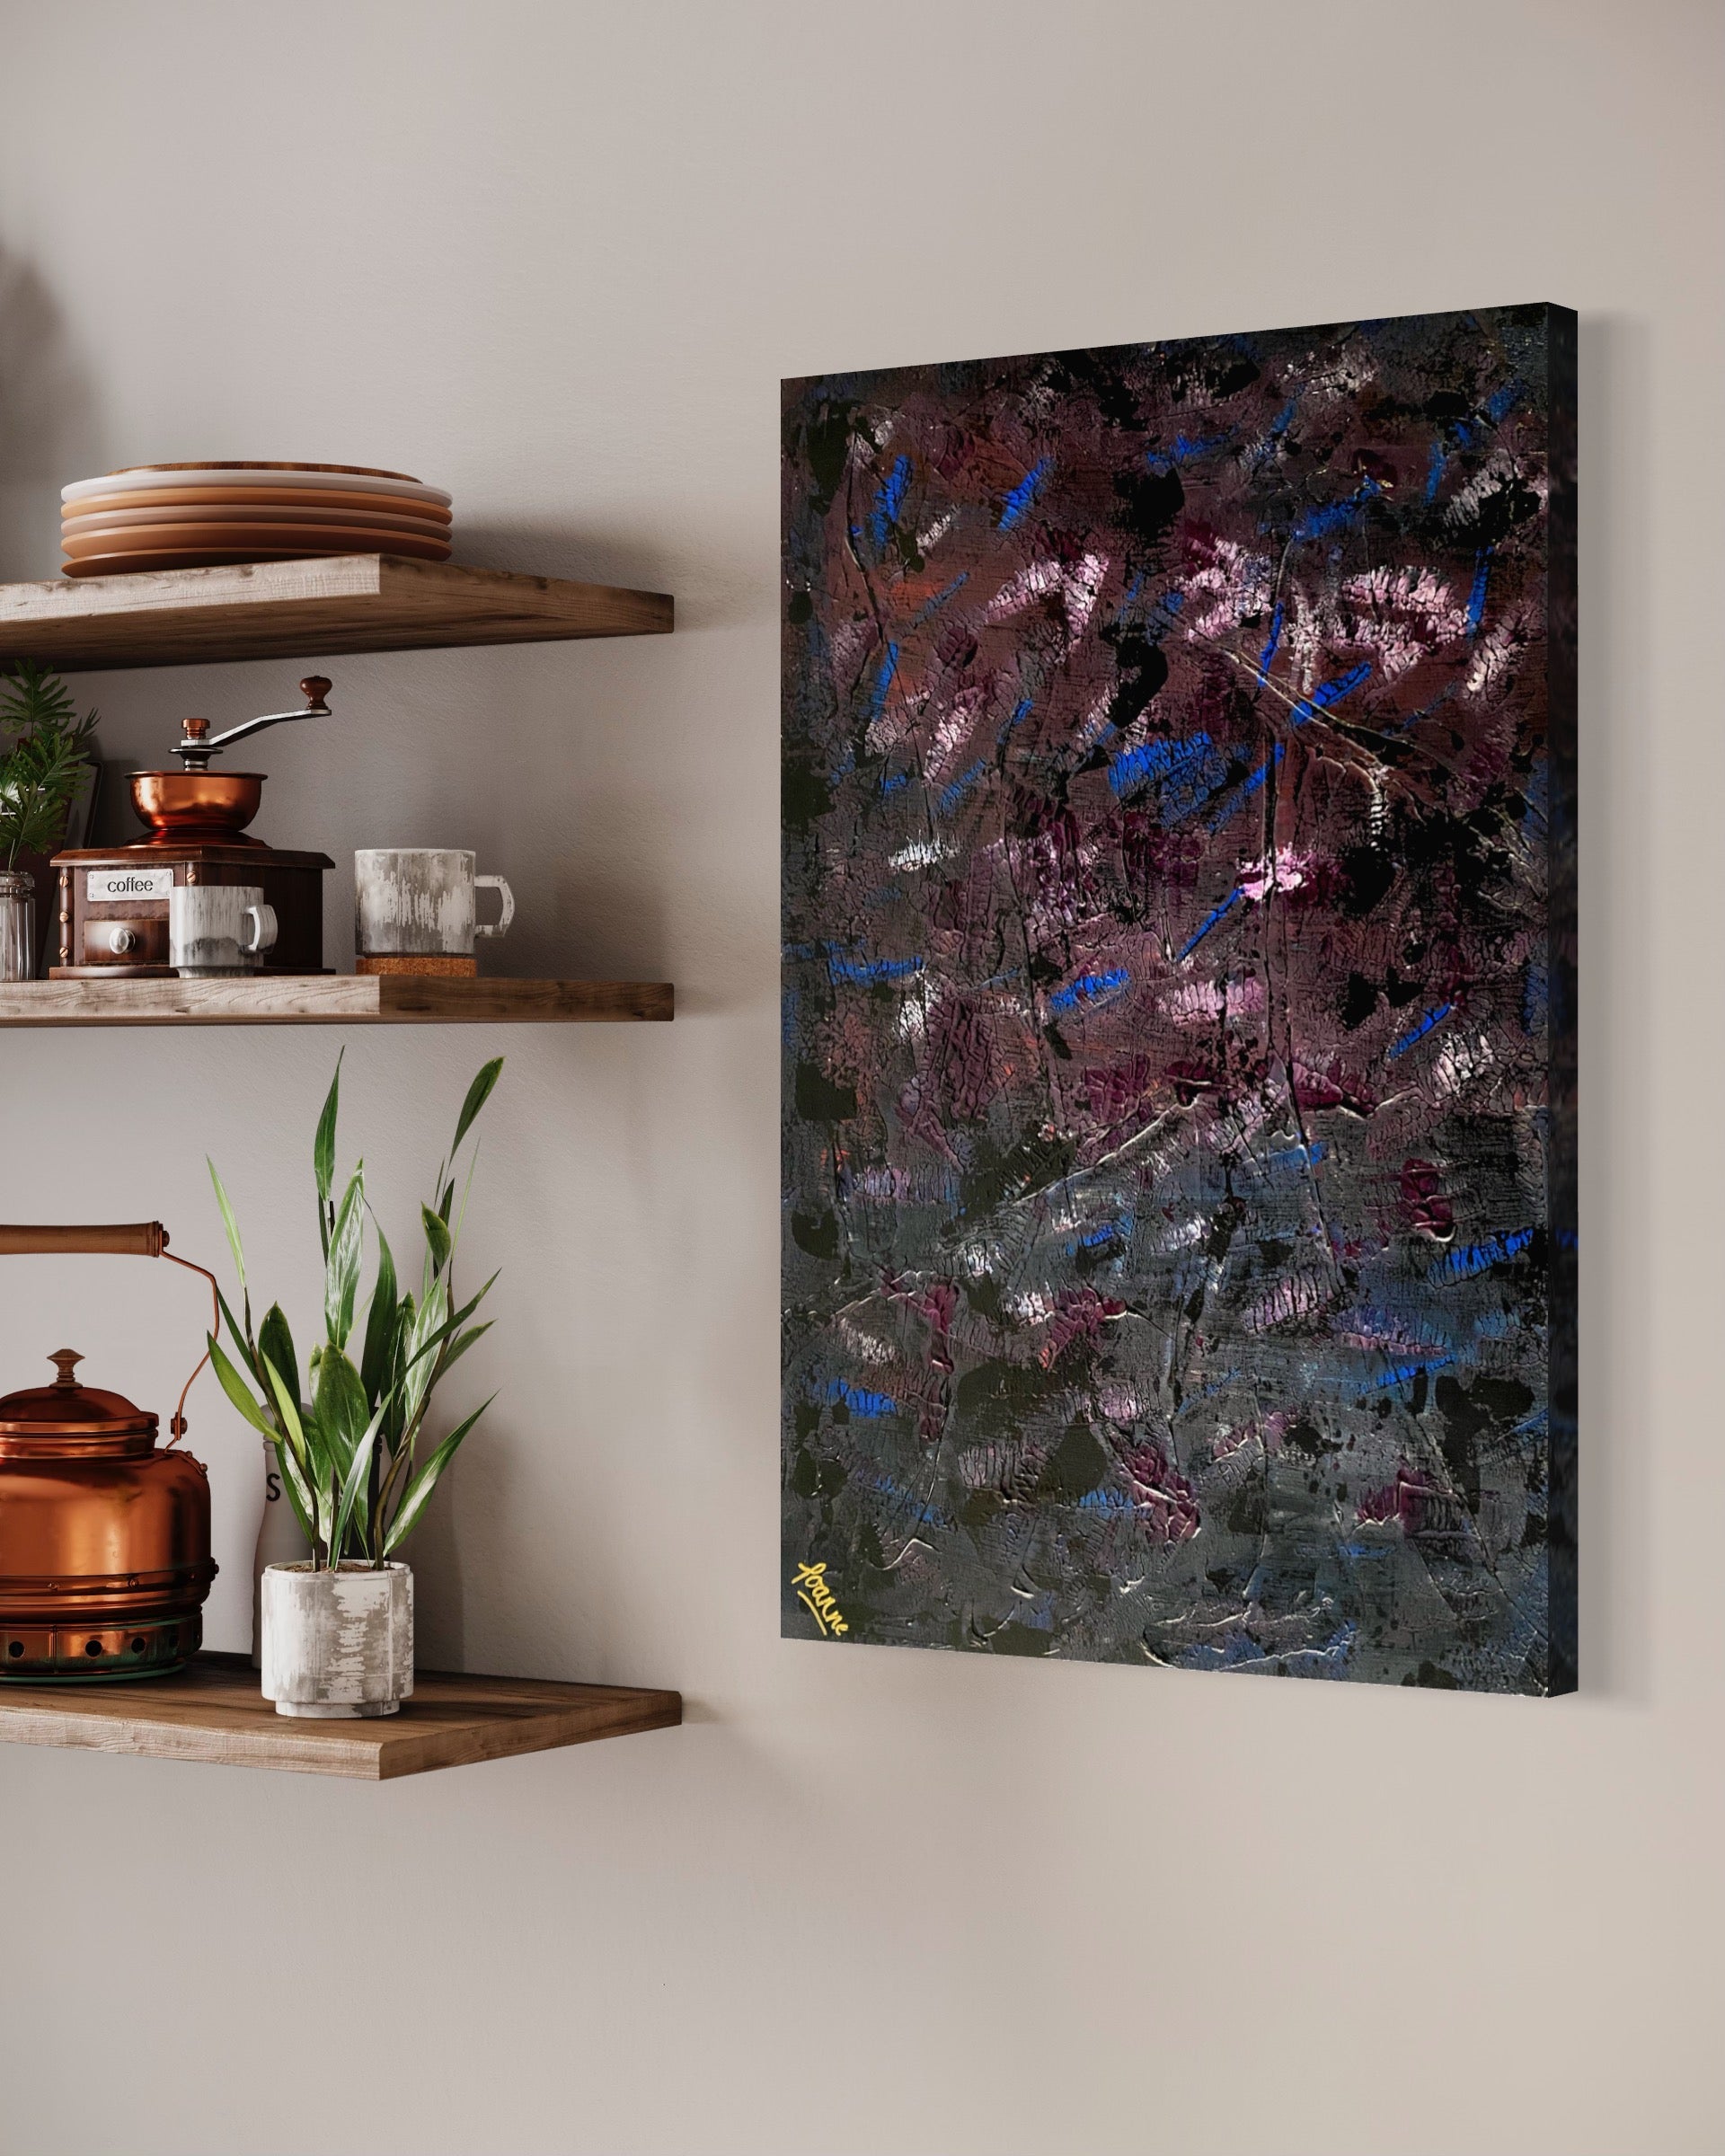 Lavendar Bloom 93 cm x 61 cm Purple Black Textured Abstract Painting